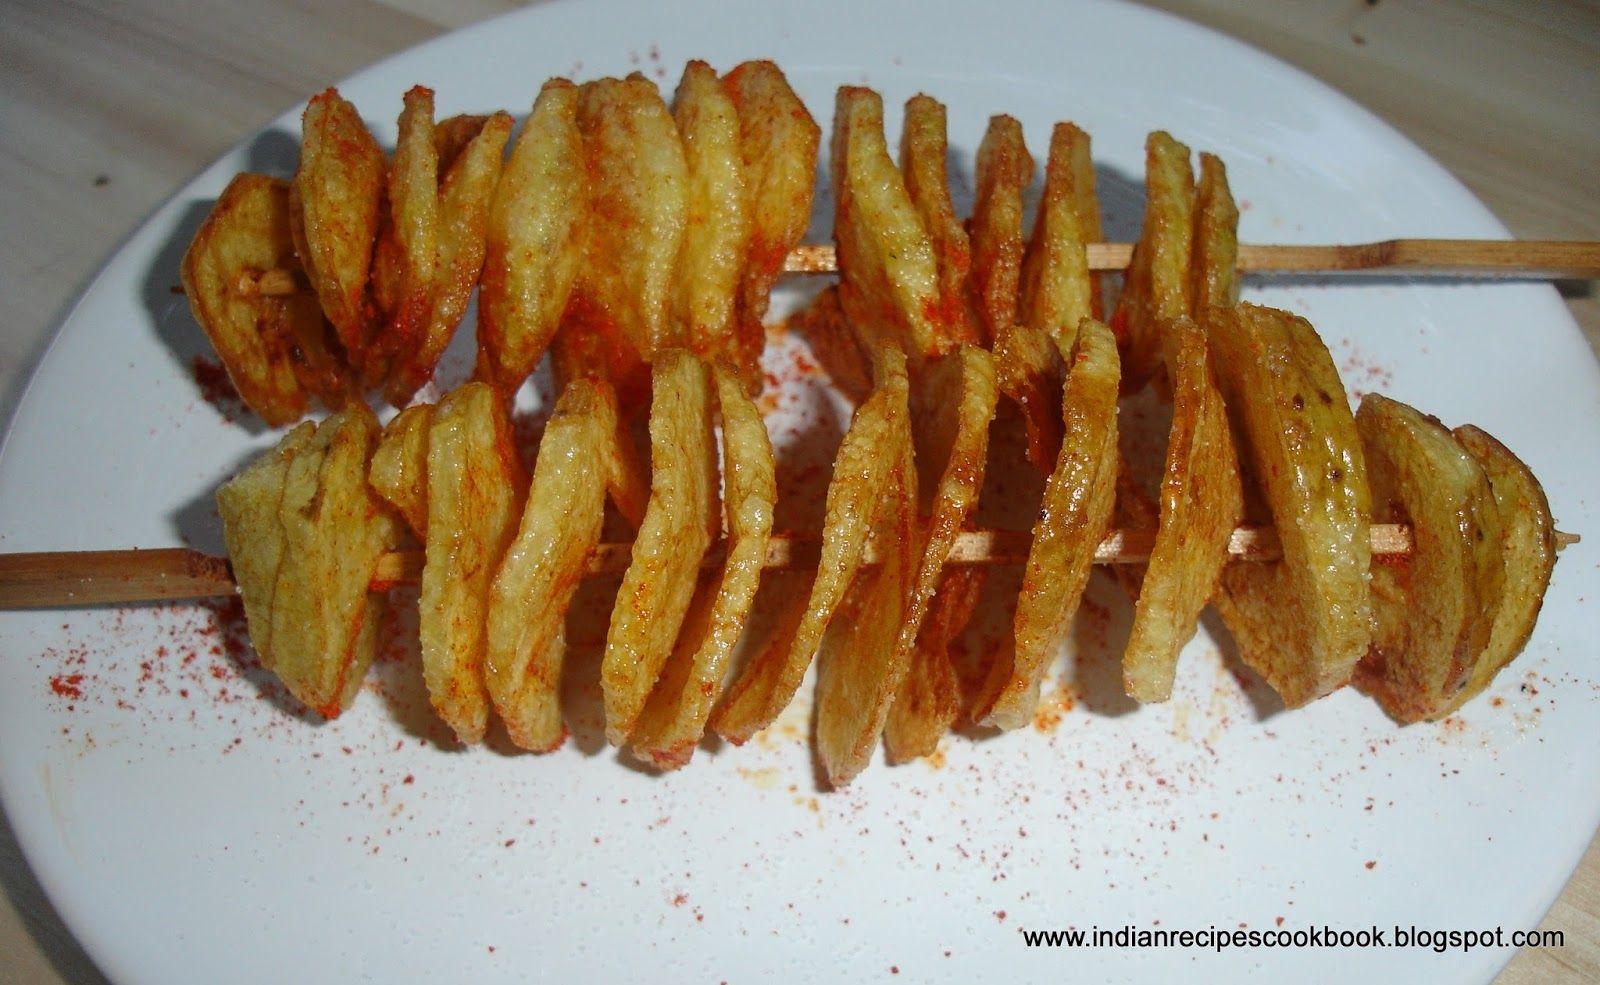 Potato Swirl Logo - Potato Swirl. Delicious Indian Recipes and more from around the world!